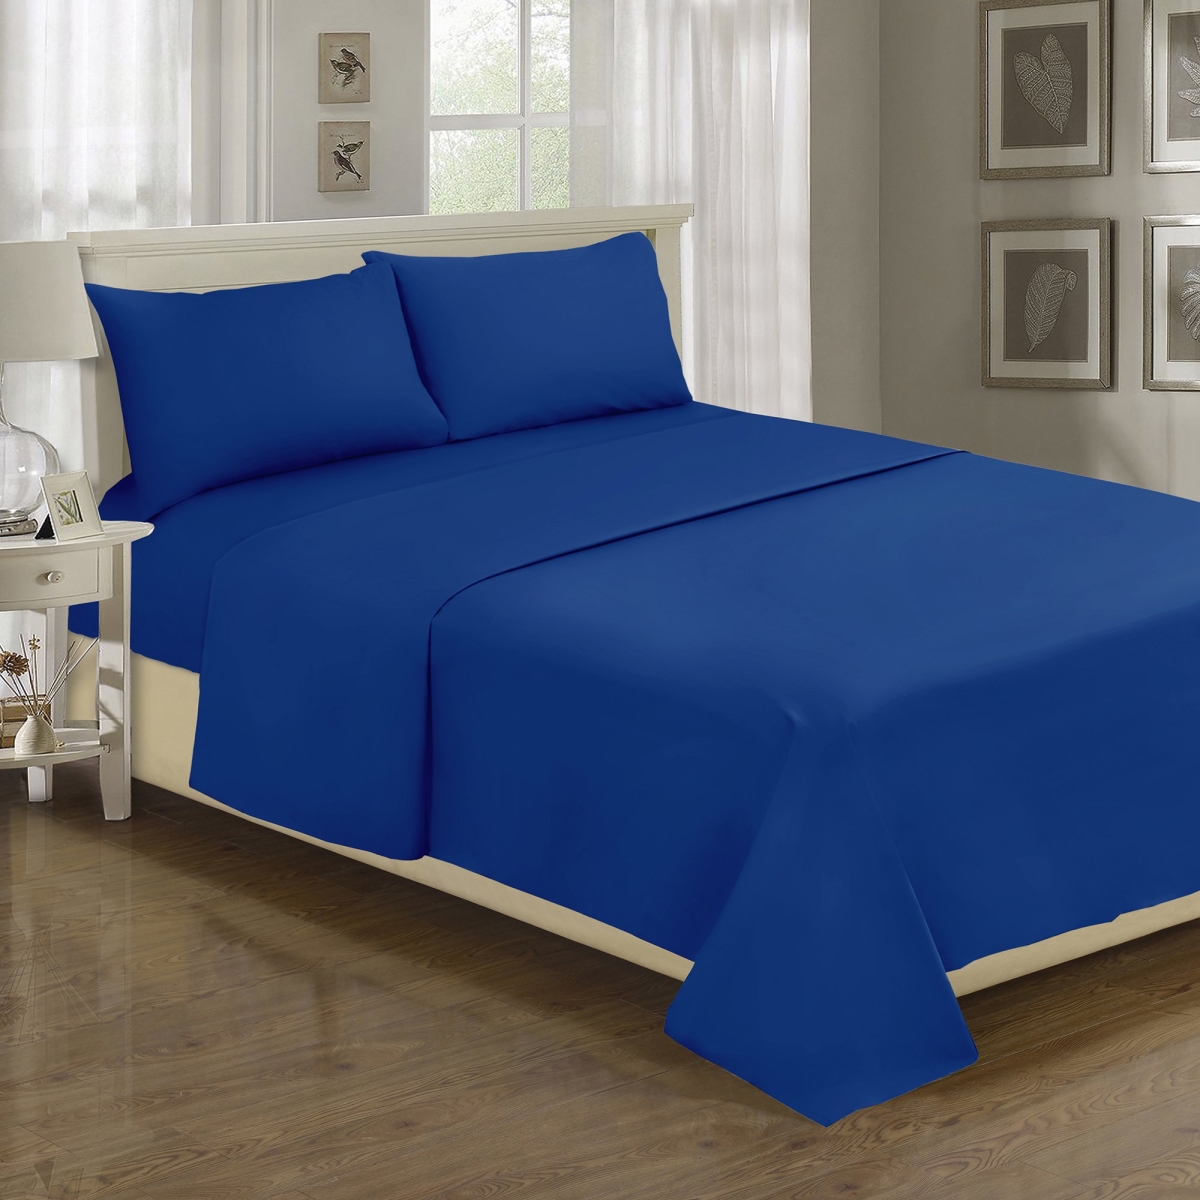 Millano Spa 1200tc Sheet Set, Blue - Queen Size